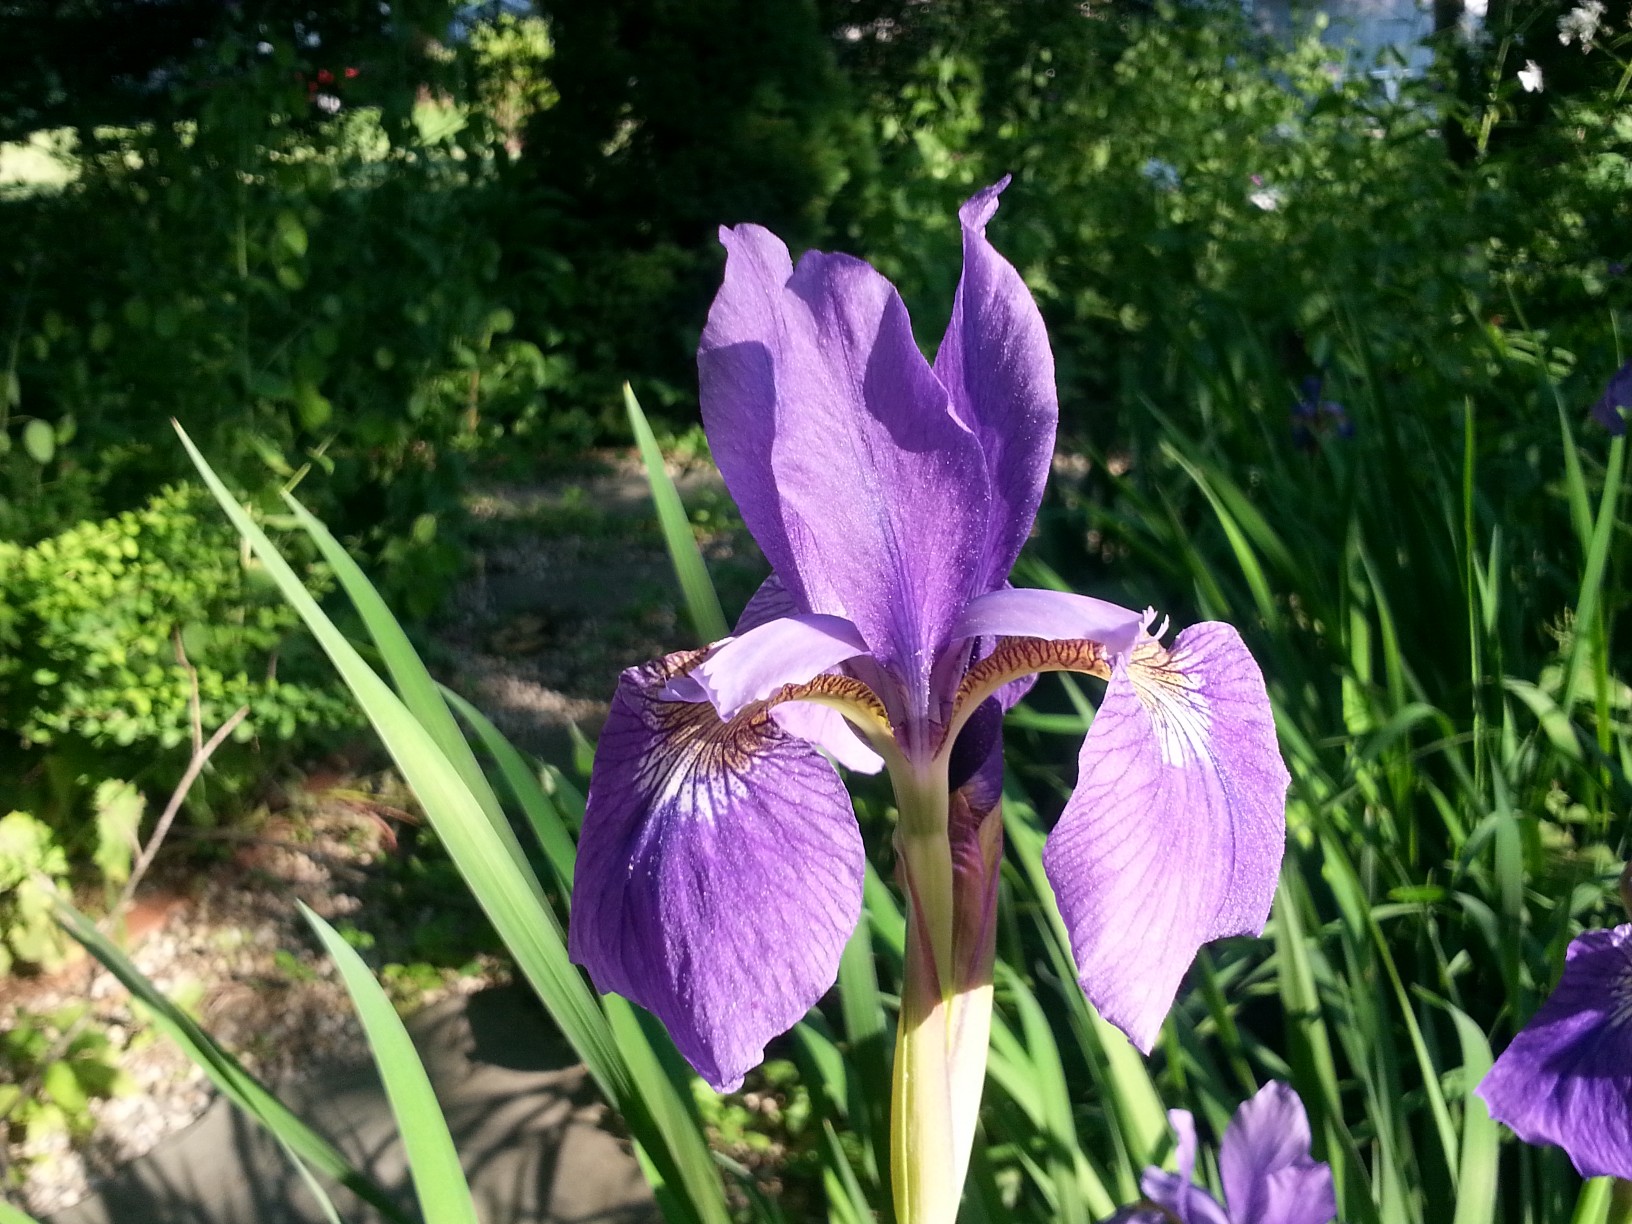 Iris blooming at the Inn